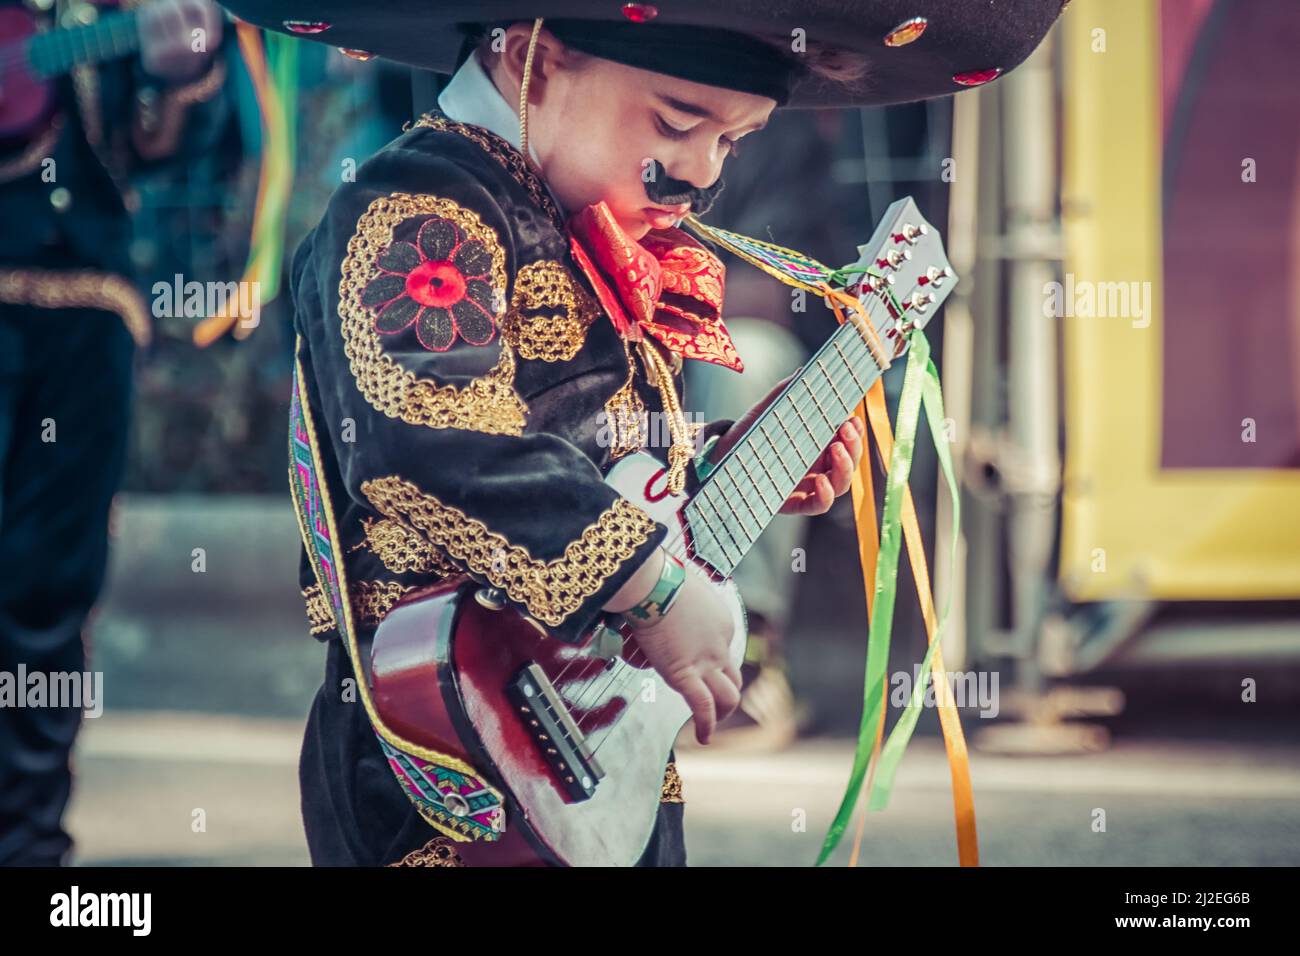 Portugal Carnival - Young boy dressed as Mexican playing the guitar -  Ovar, Grande Desfile. Big Parade, Pindéricus Grupo de Carnaval. Stock Photo